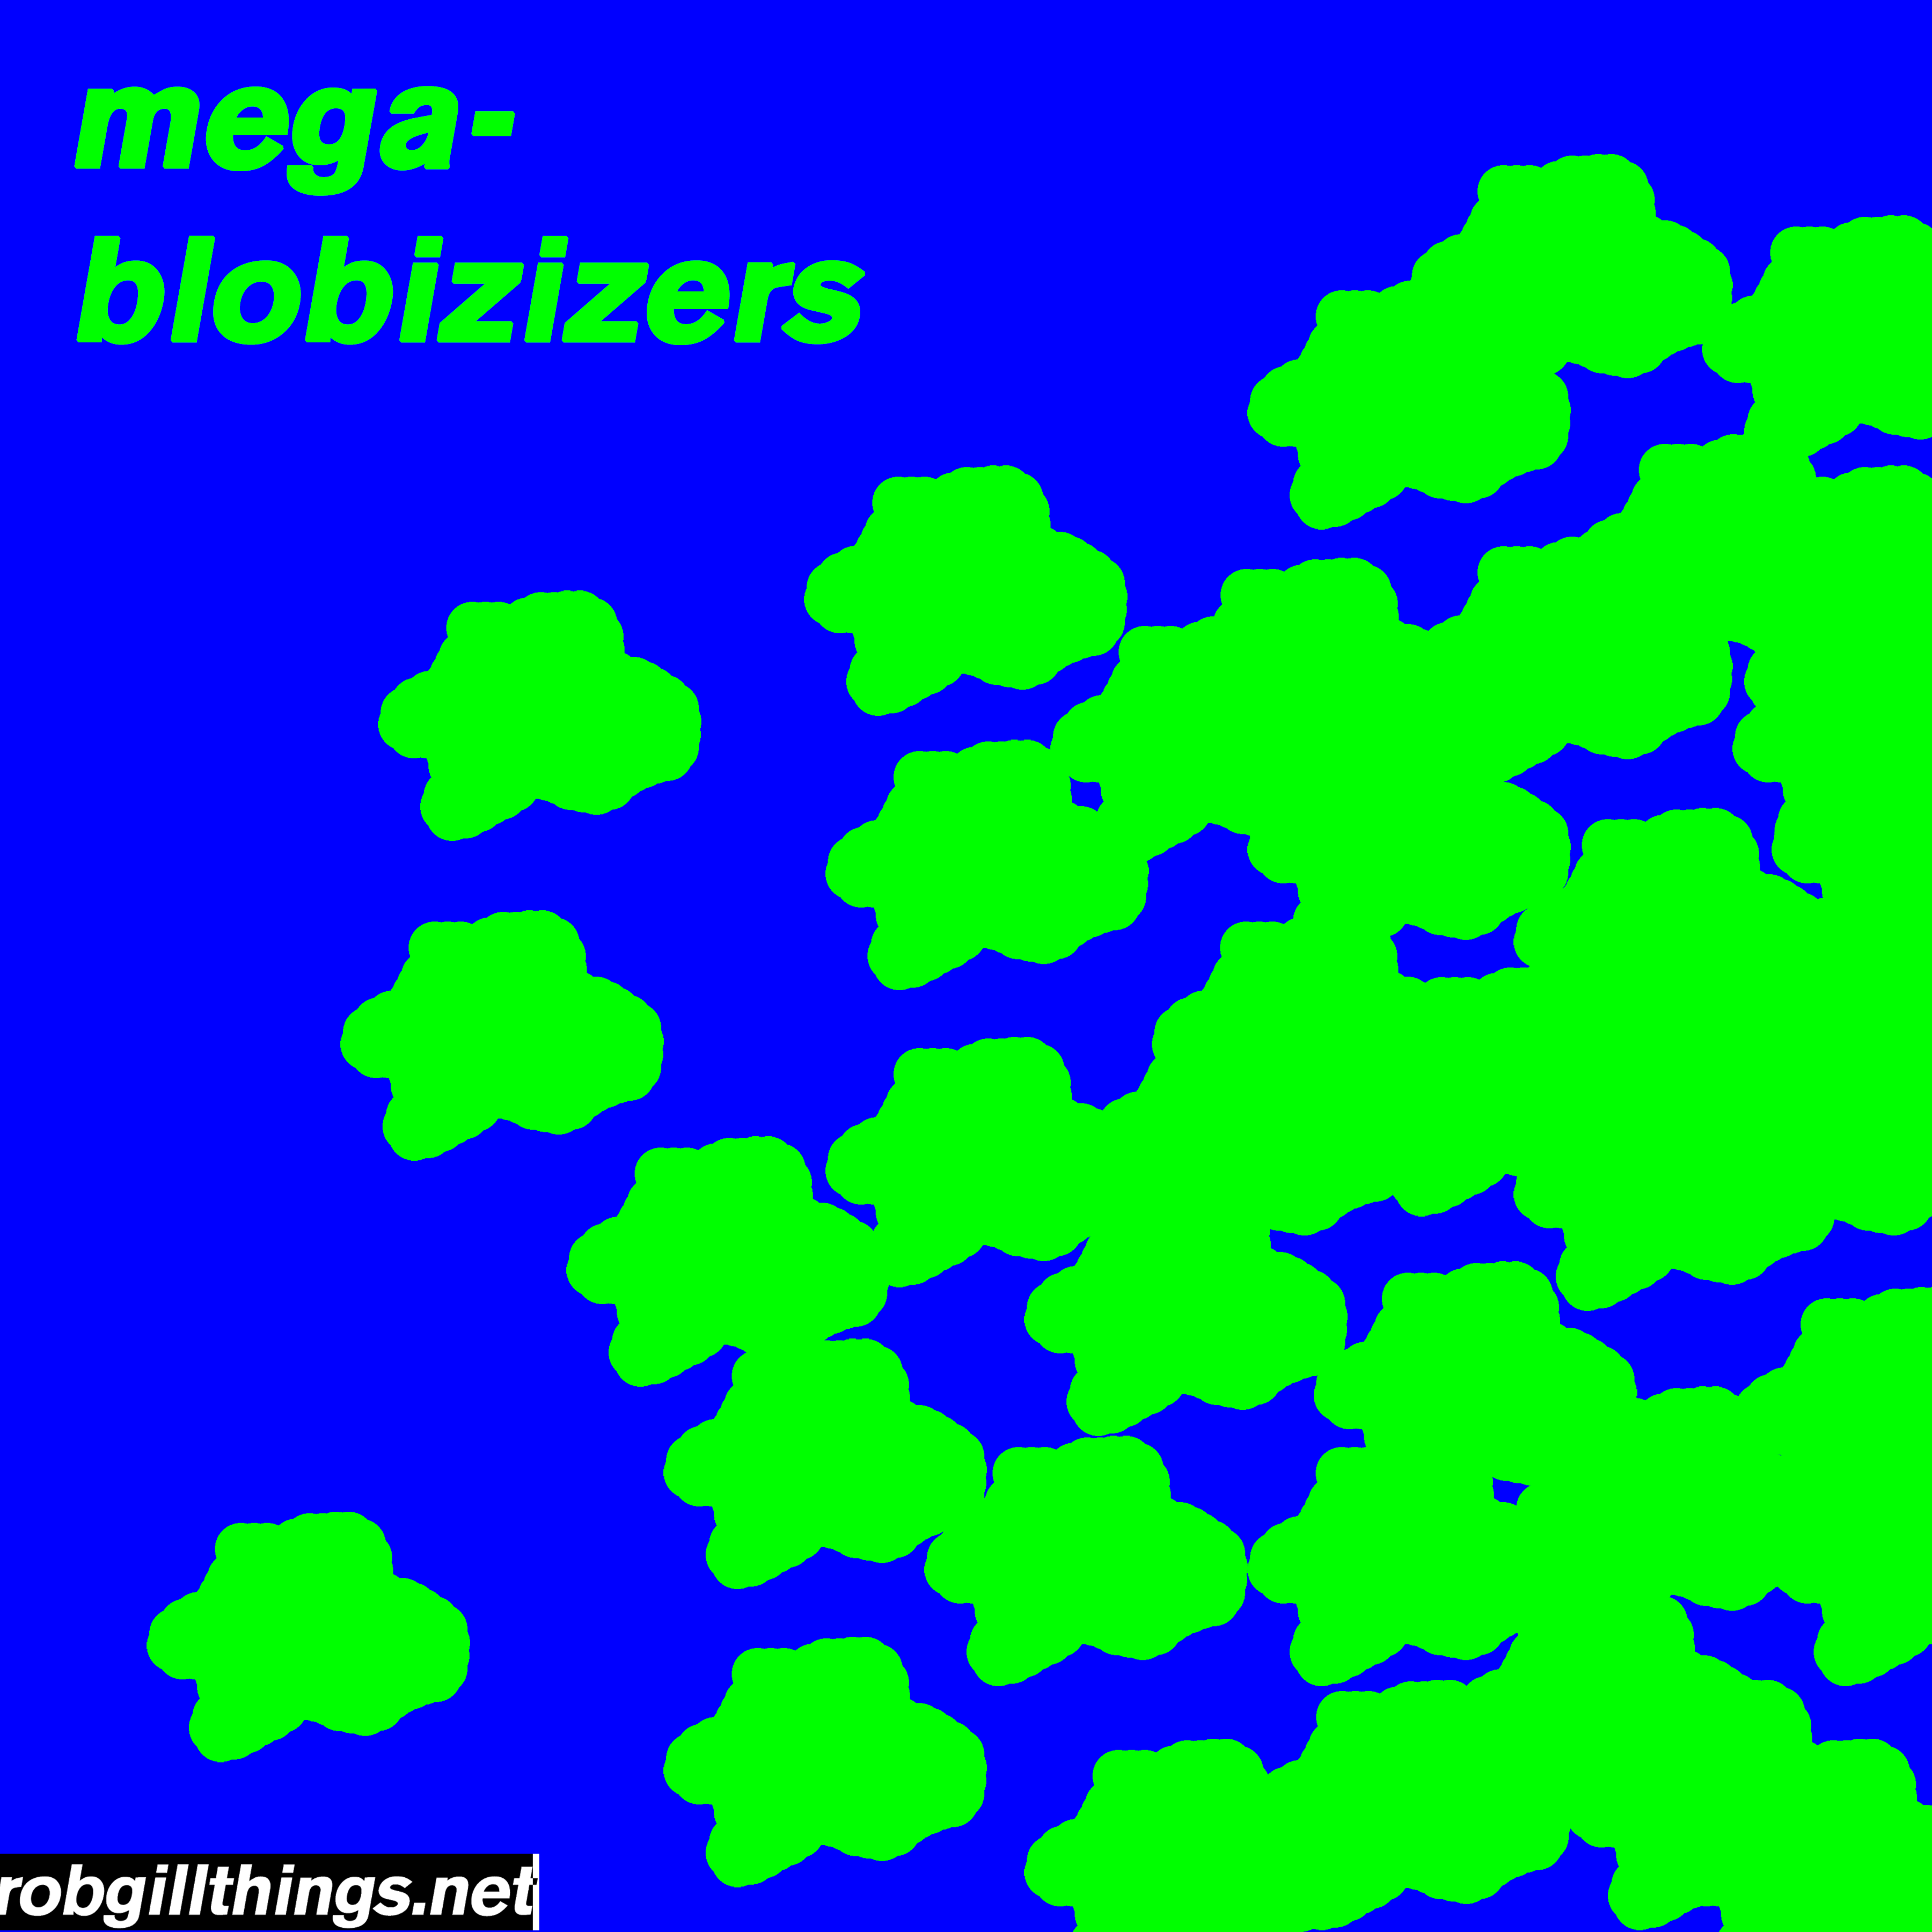 mega blobizizers - long sleeve